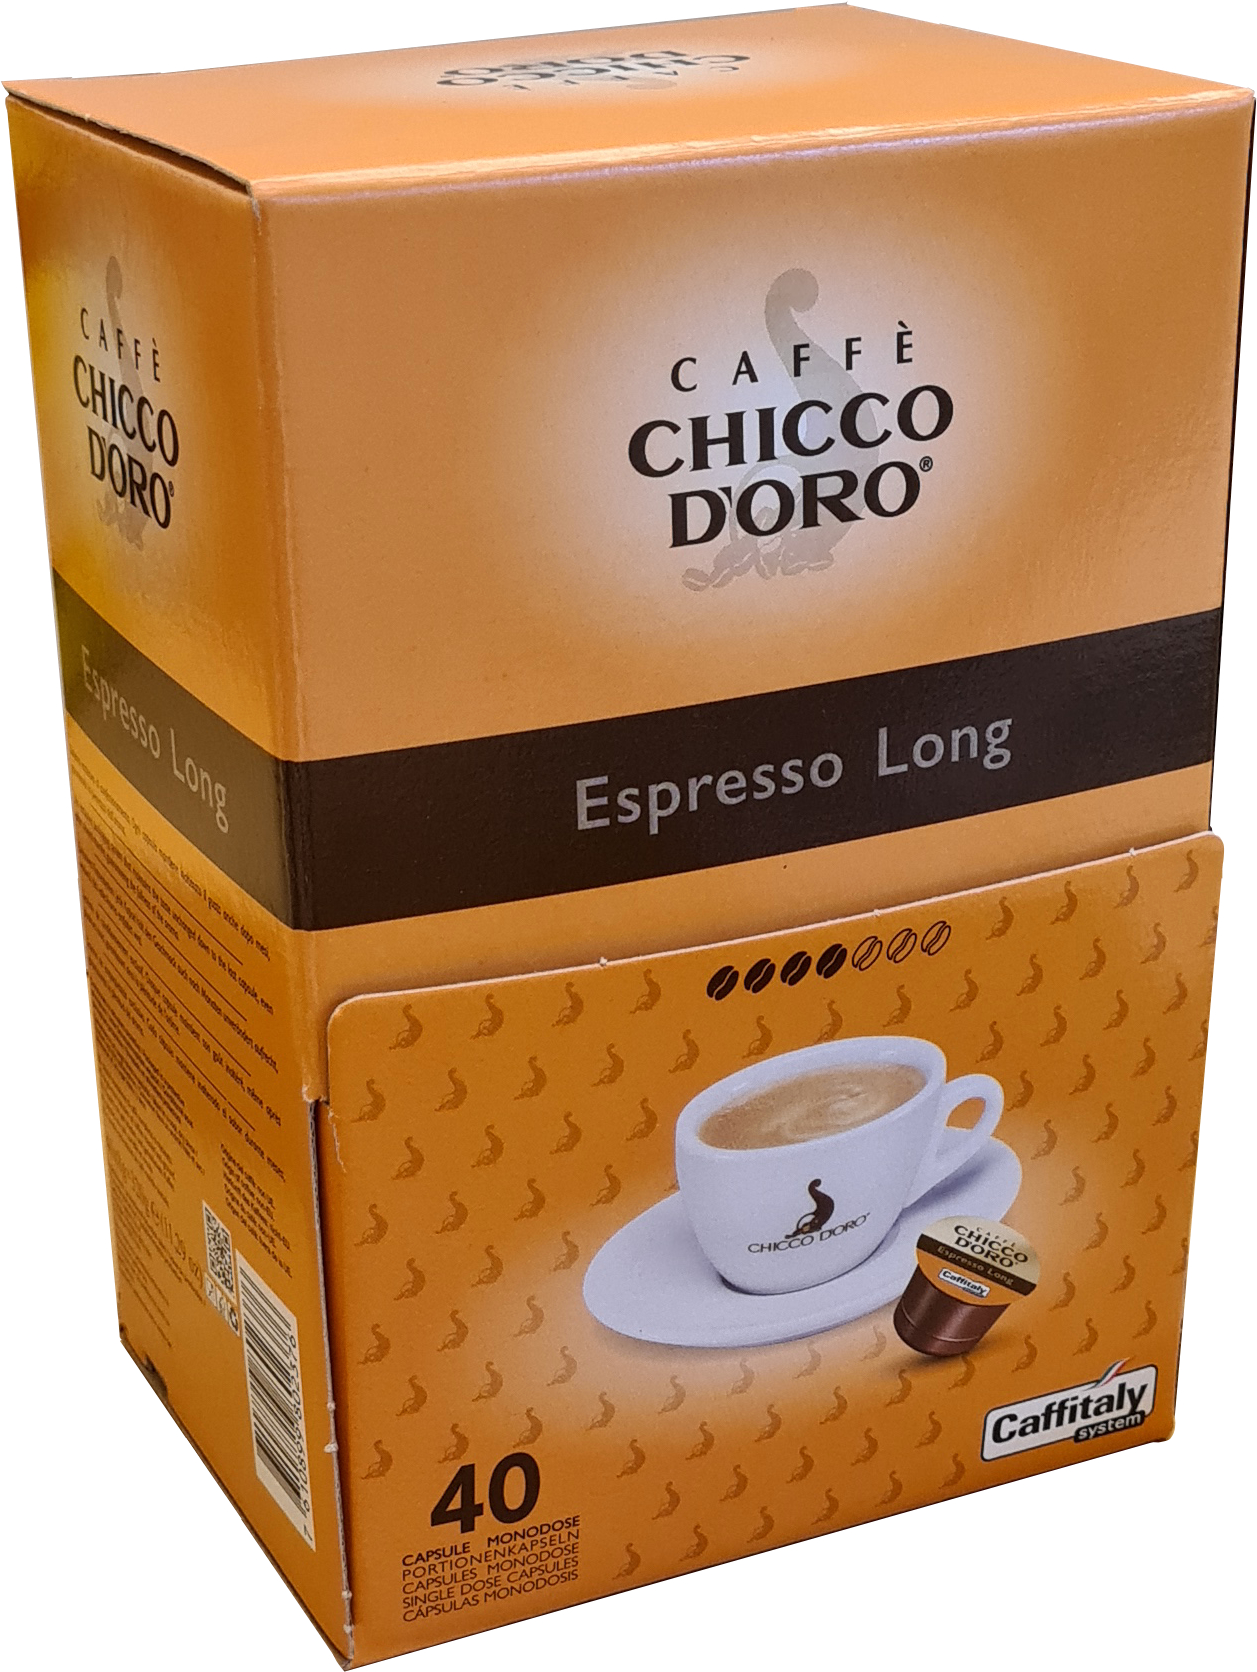 CHICCO D'ORO Kaffee Caffitaly 802376 Espresso Long 40 pcs.